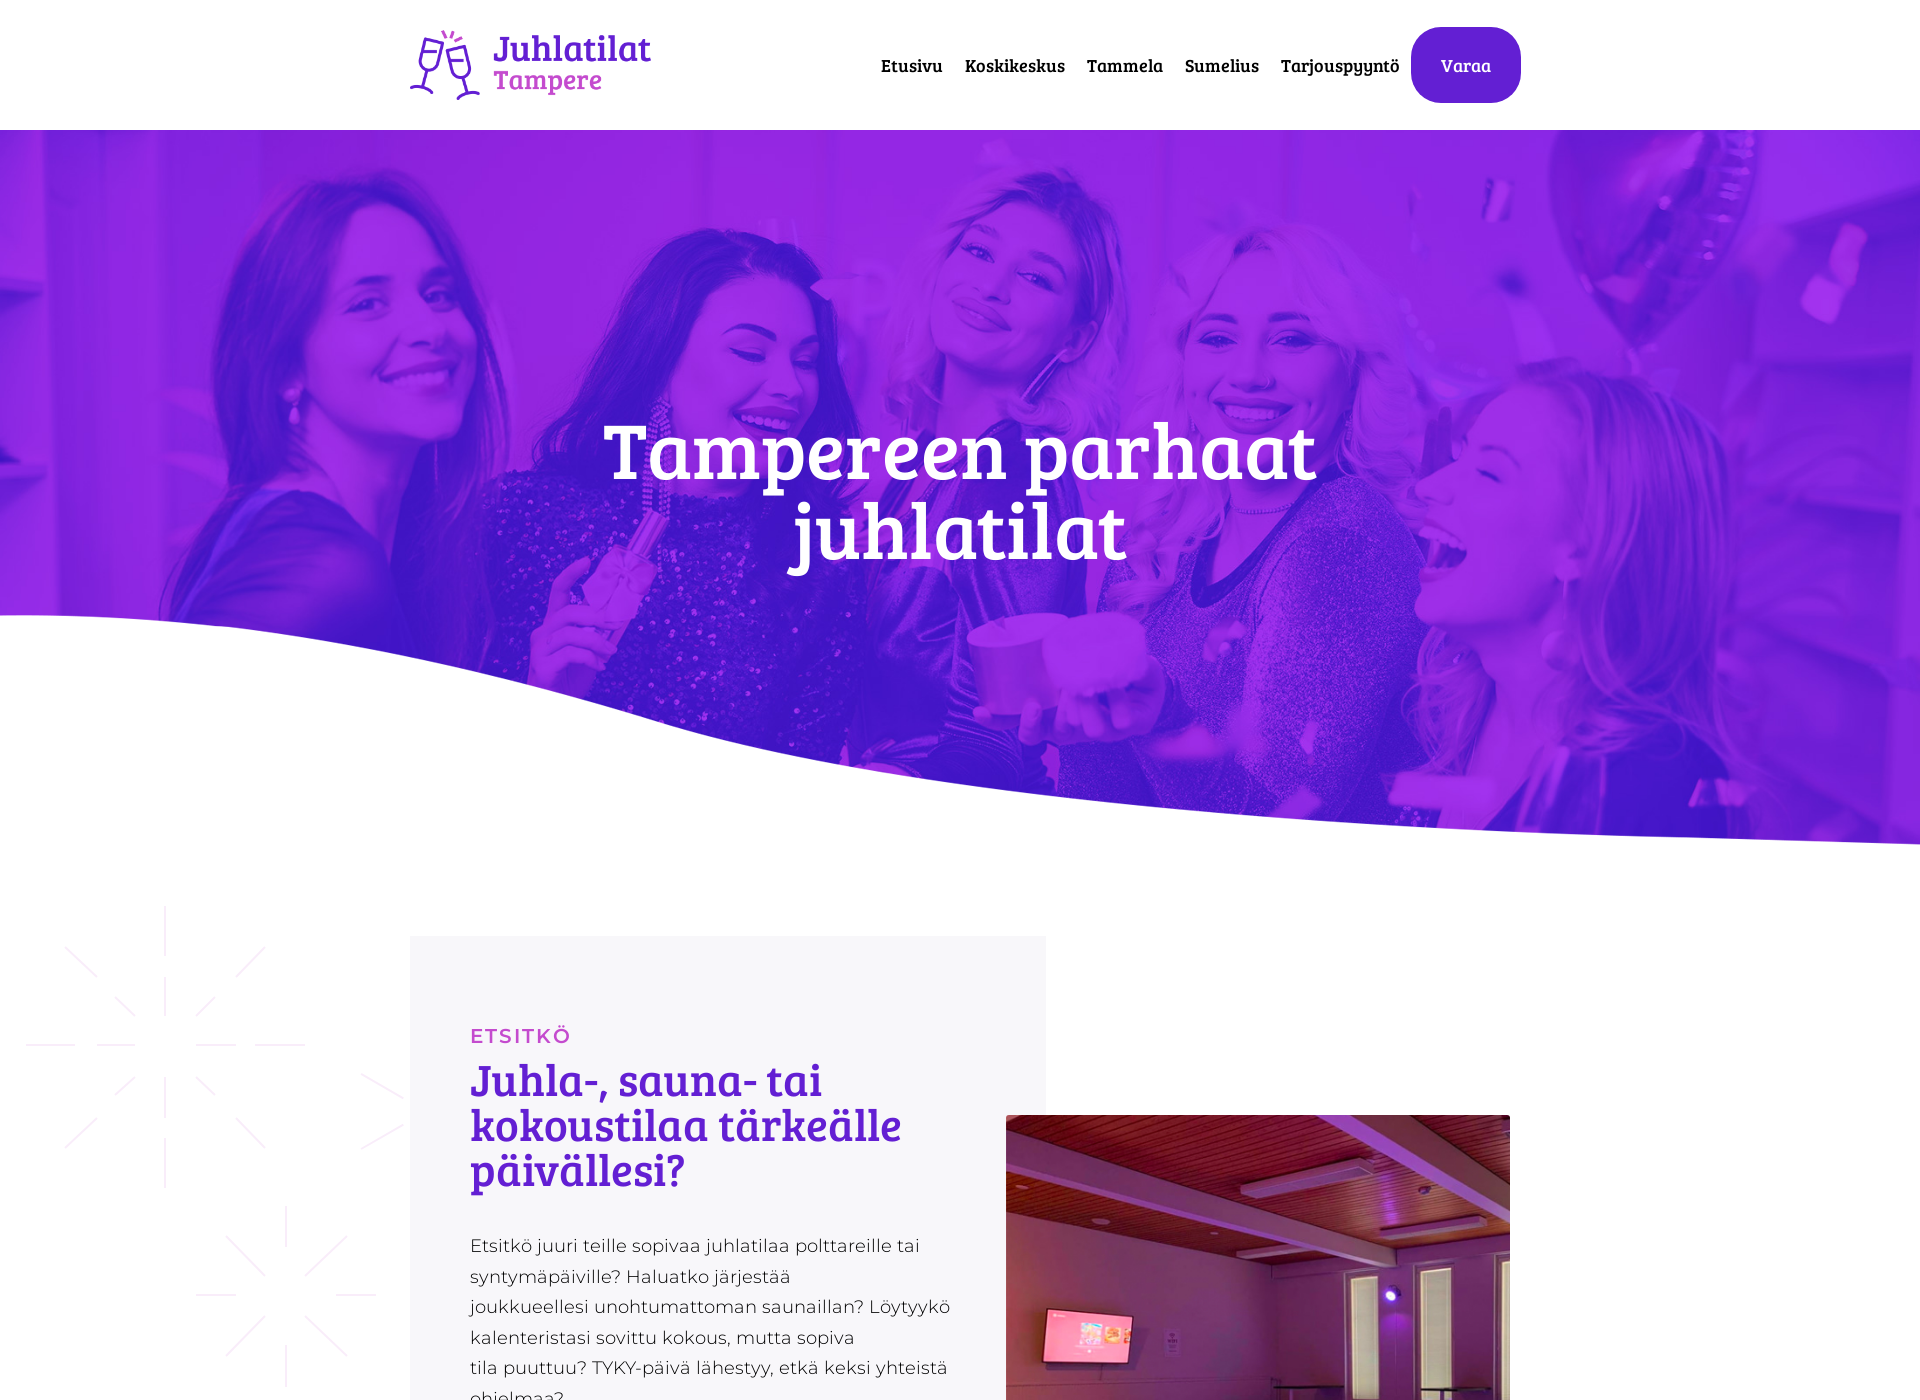 Screenshot for juhlatilattampere.fi